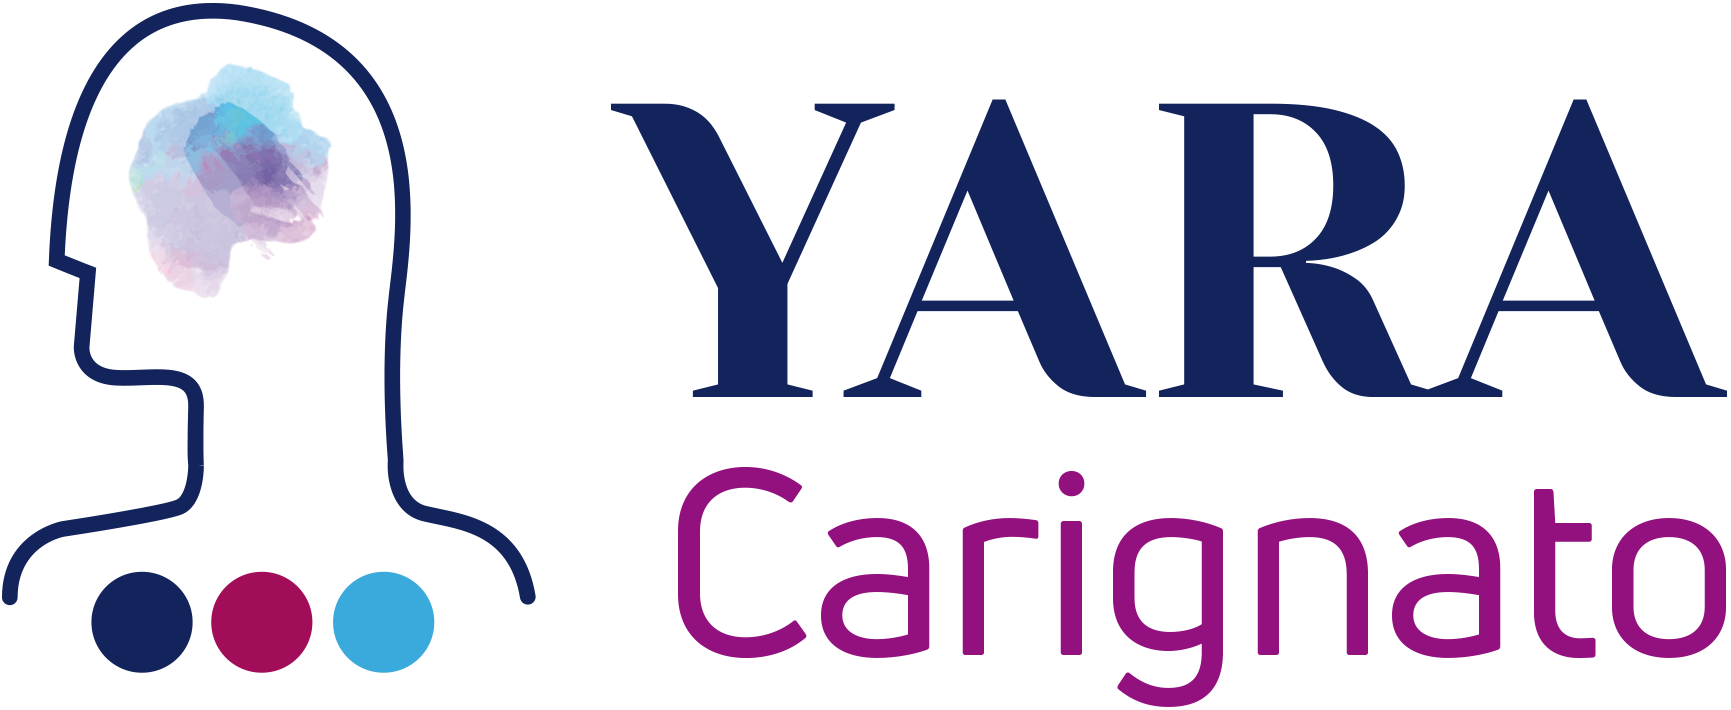 Yara Carignato